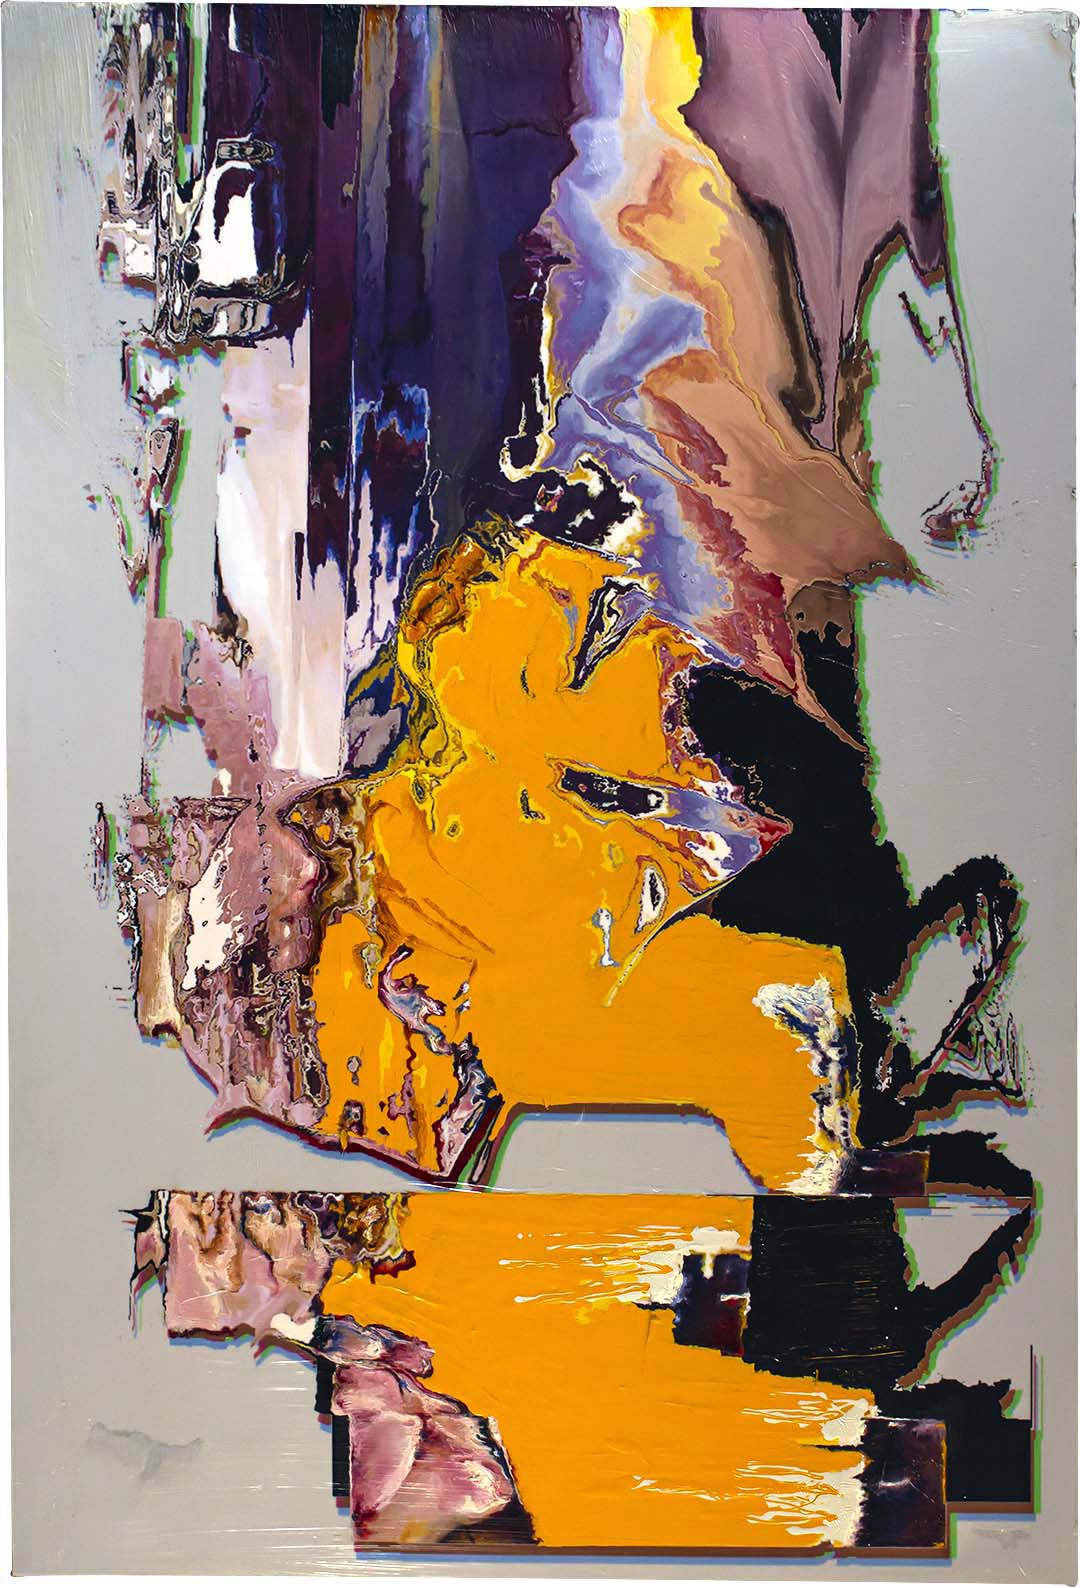 Adelfino Corino, Rimm, 2019. Oil painted digital print on panel, 24 X 26 inches.